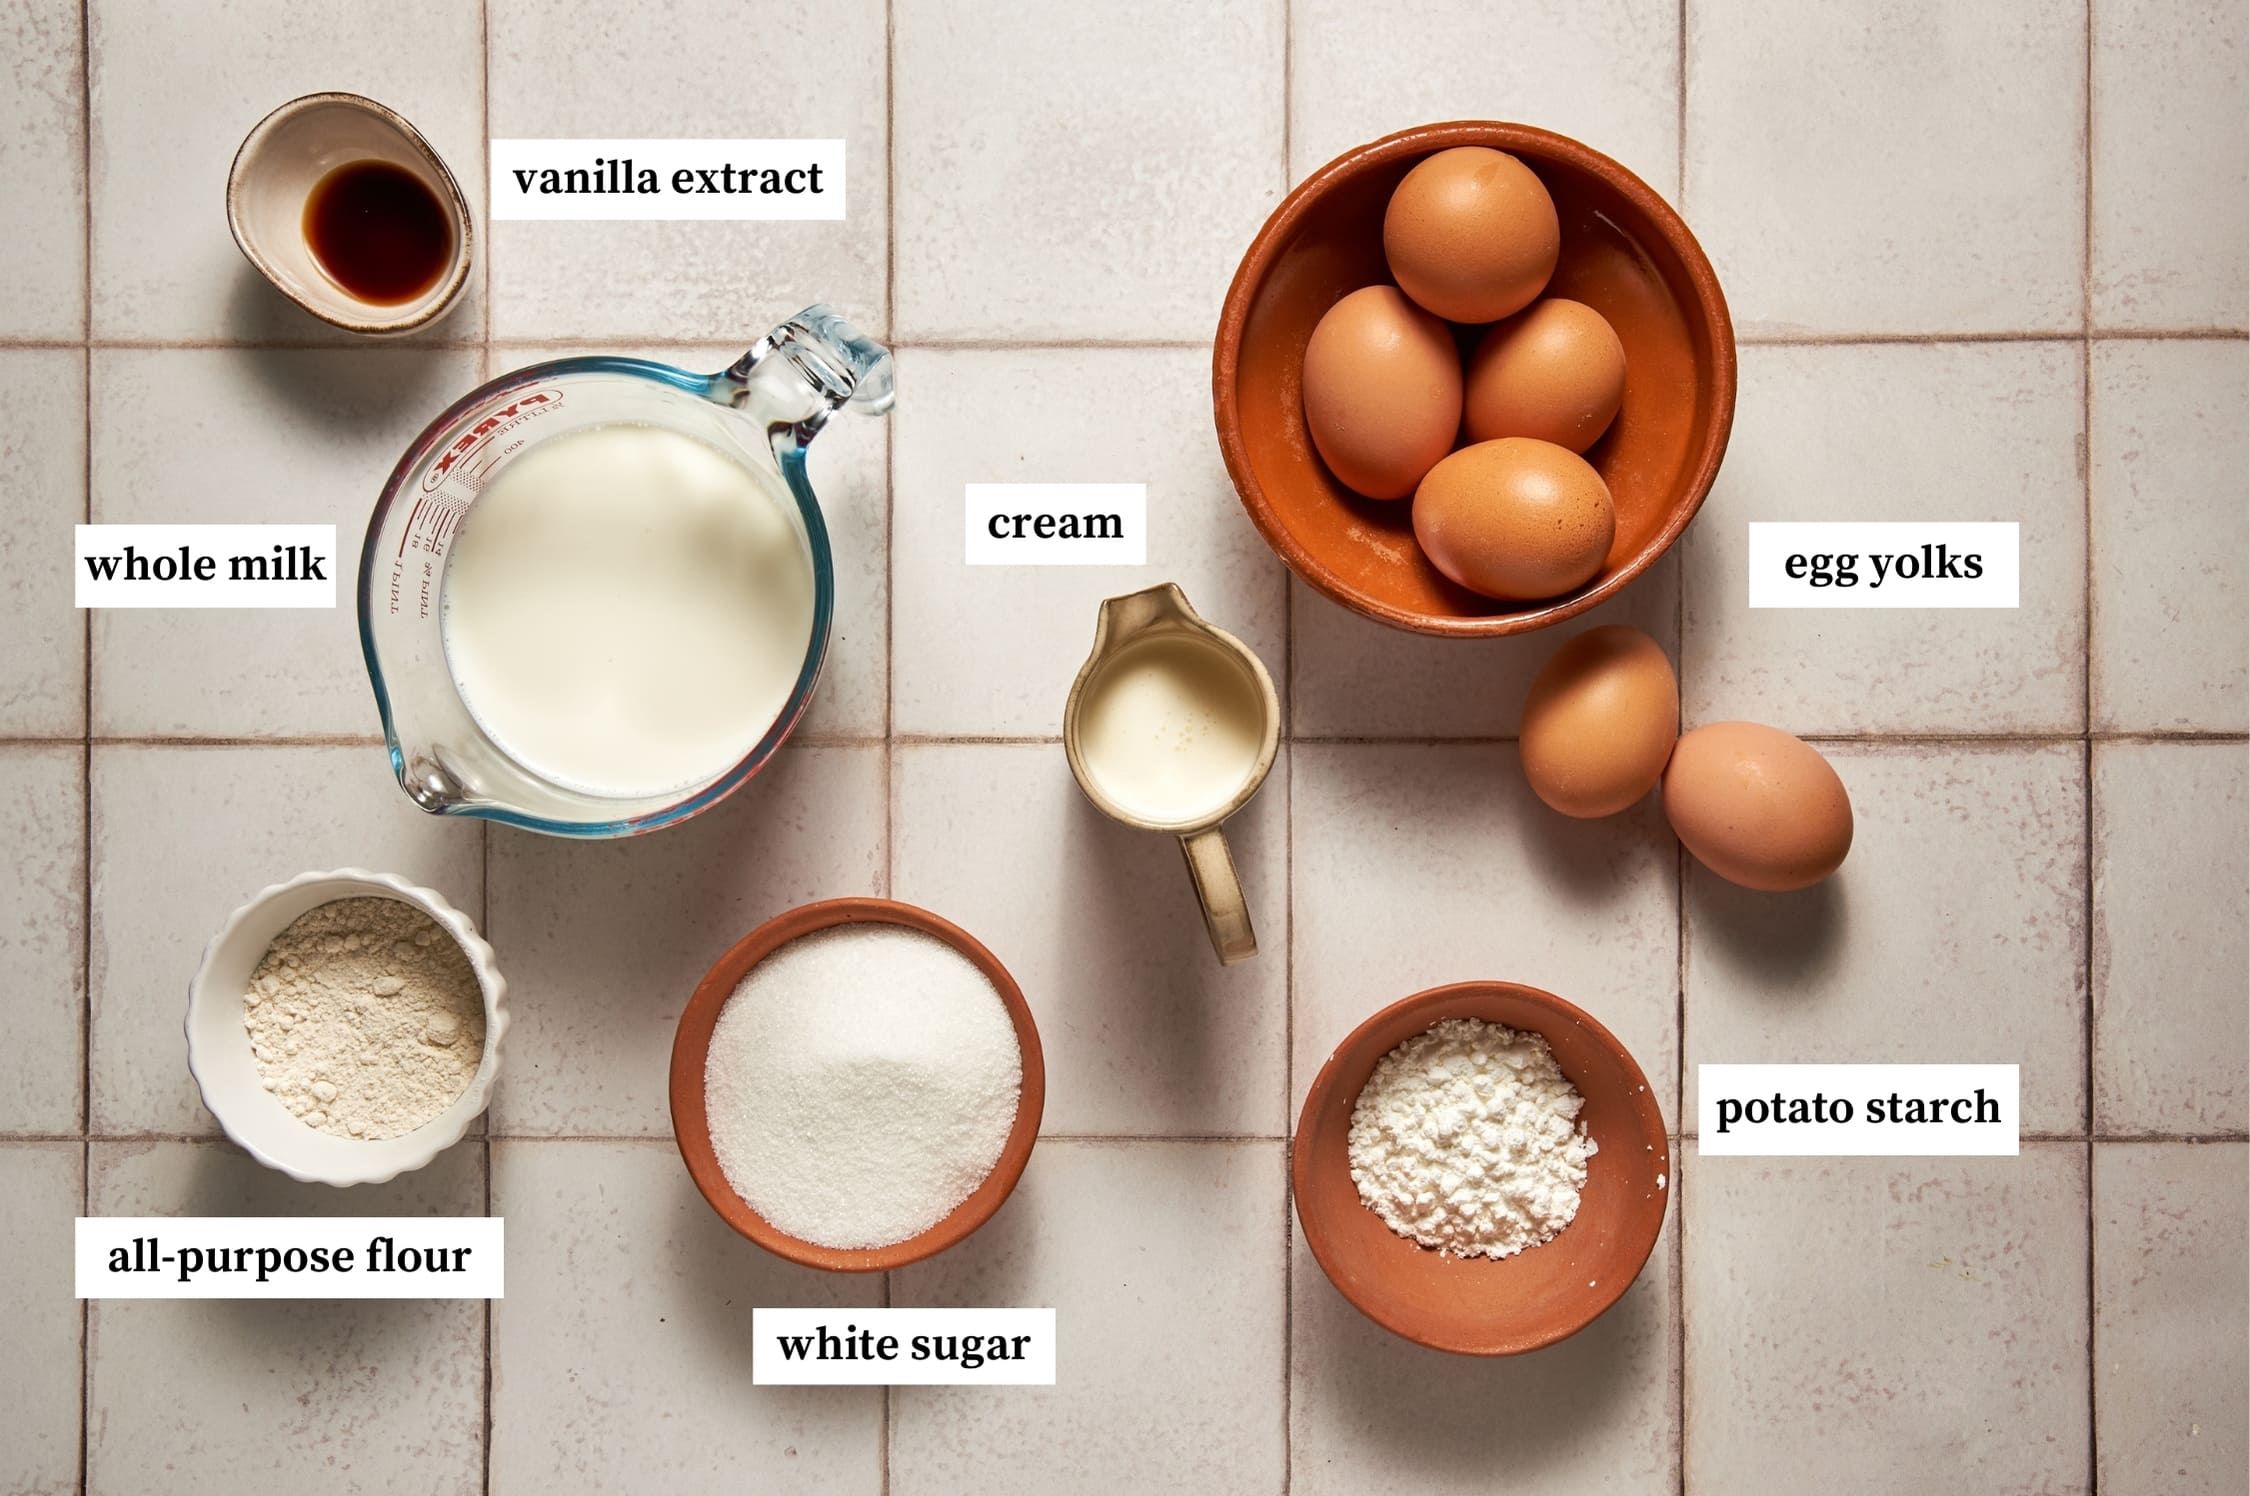 italian pastry cream ingredients, vanilla extract, whole milk, eggs, cream, flour, starch, sugar.